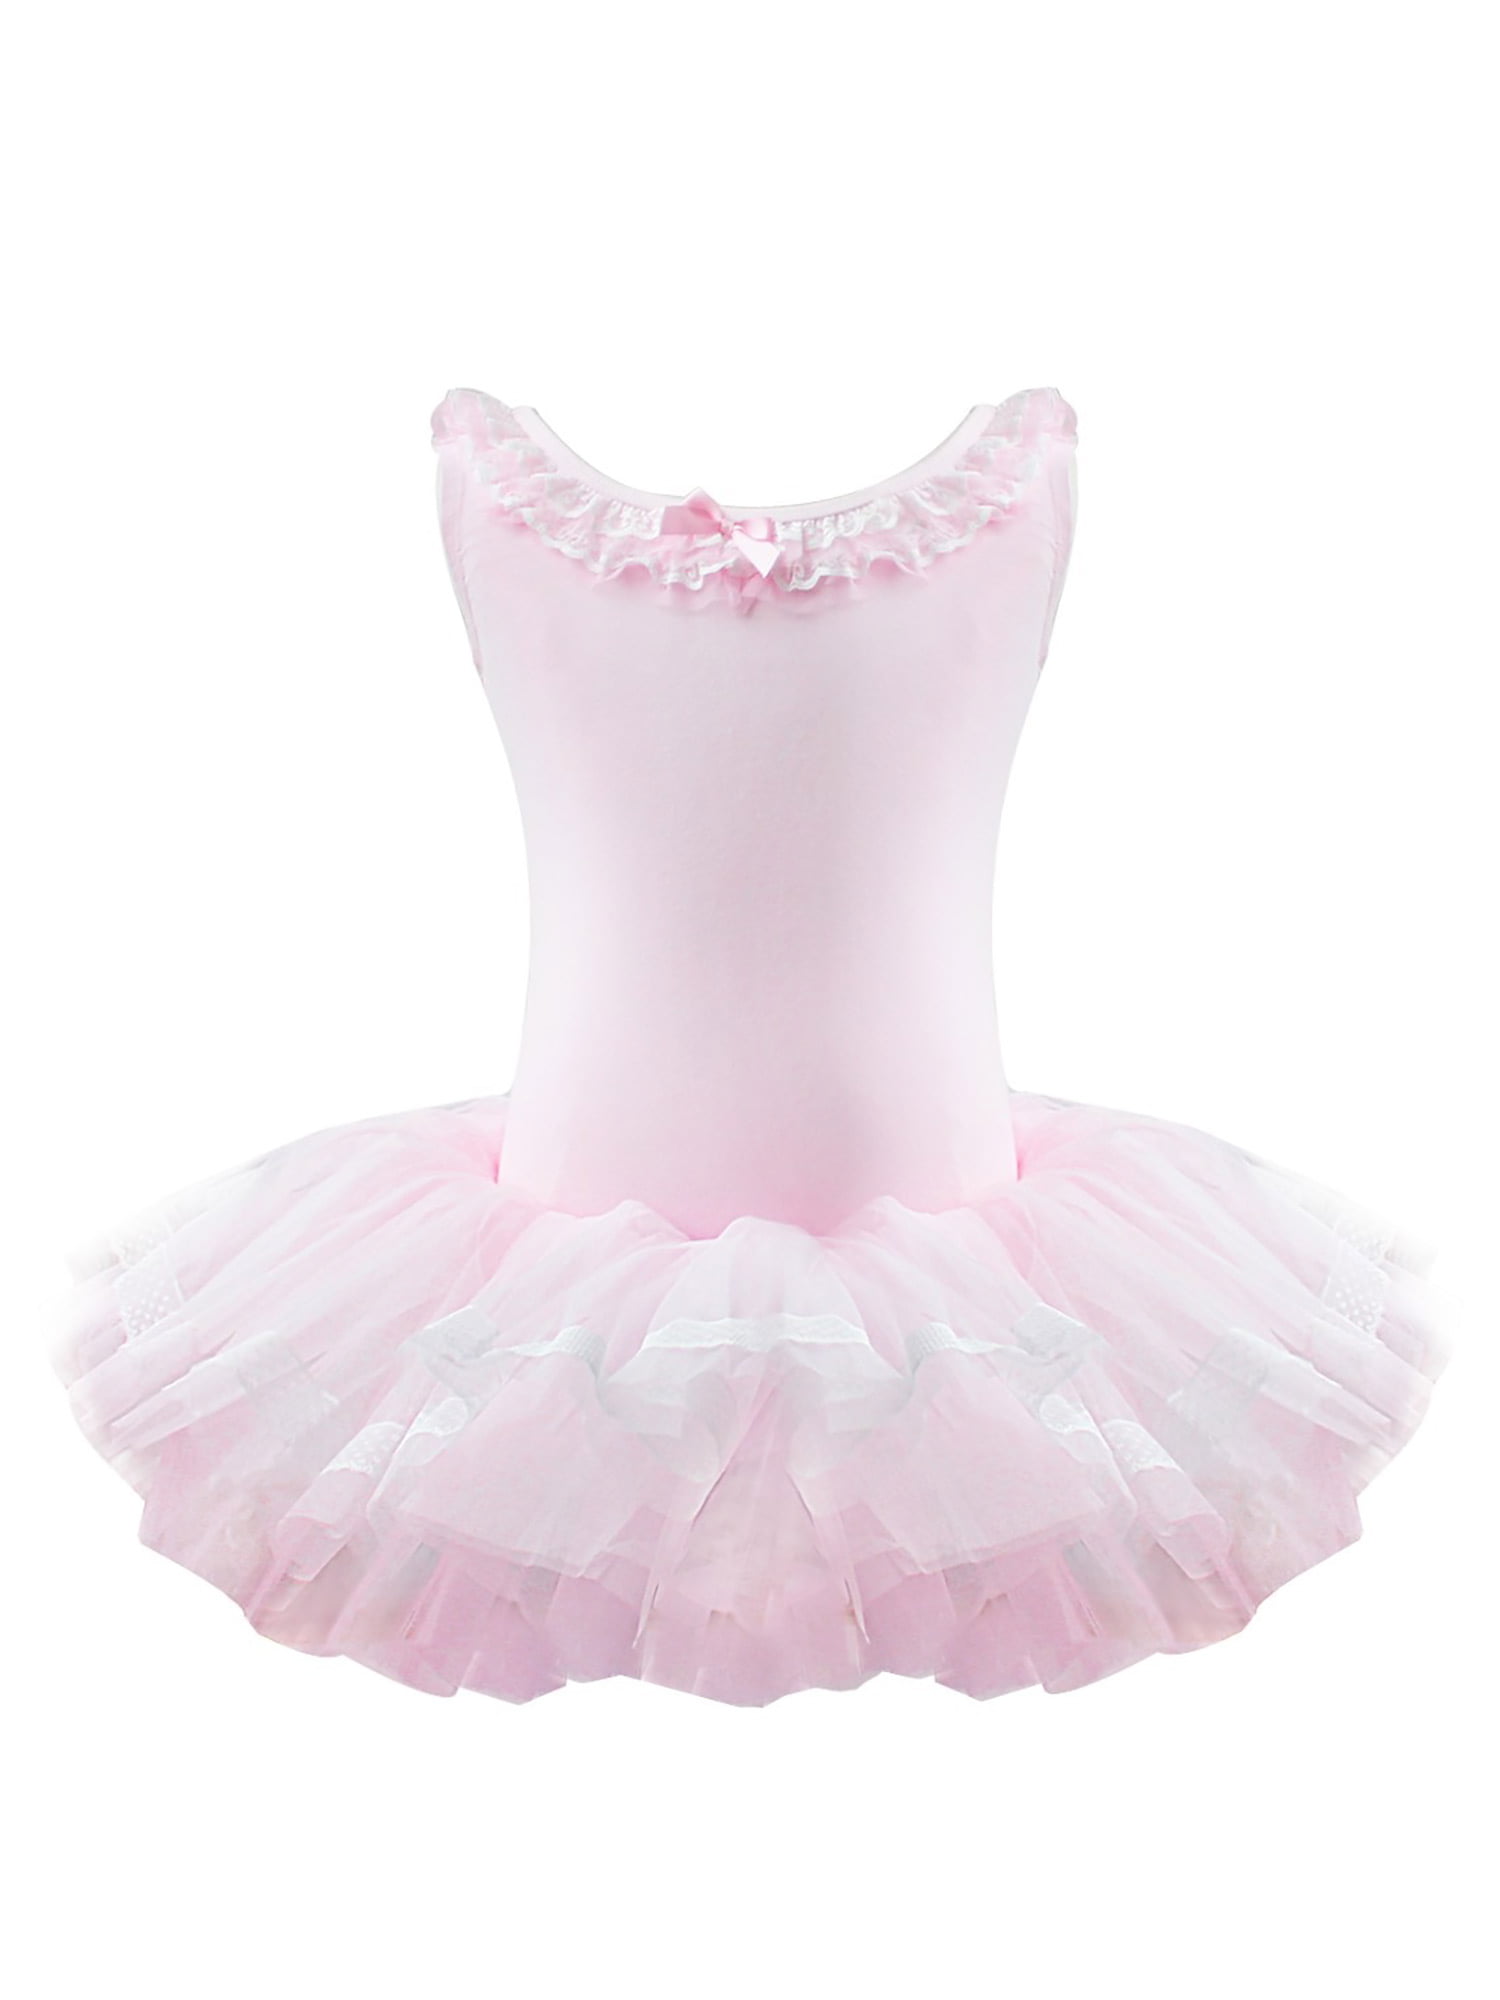 Details about   Girls Ballet Dance Leotard Dress Kids Gym Skating Tutu Skirts Dancewear Costumes